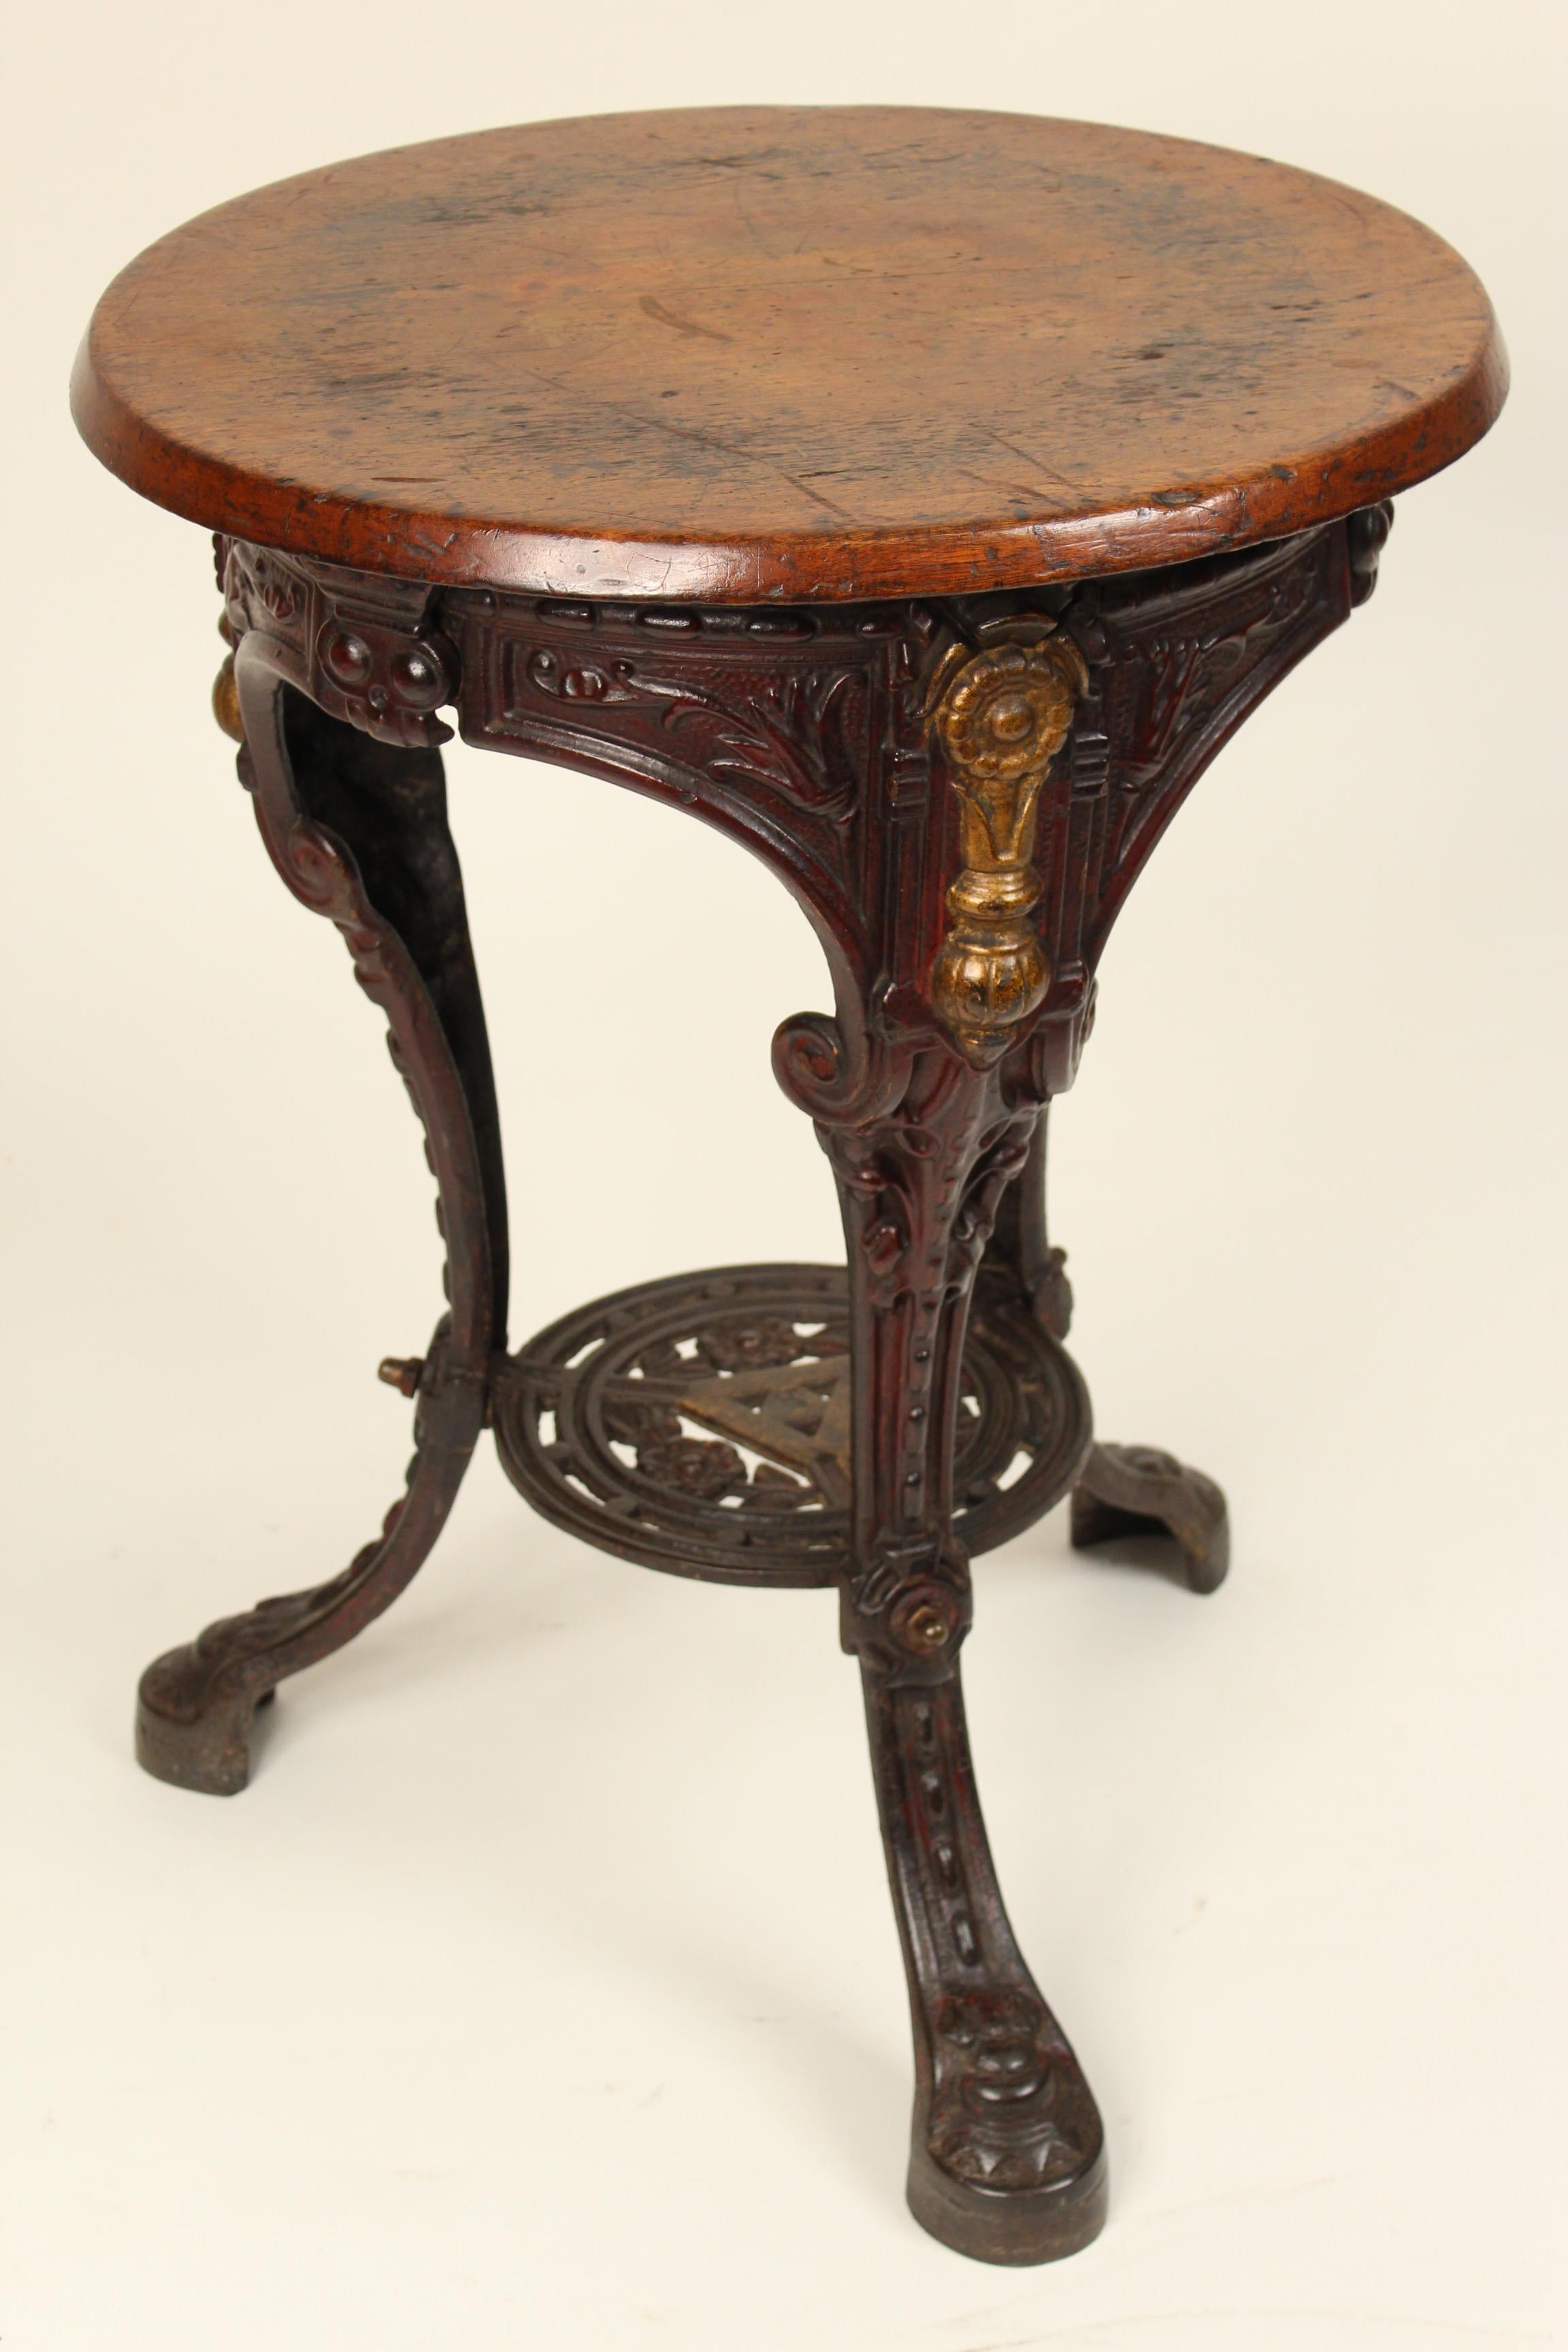 English iron and gilt iron pub table with a mahogany top, circa 1920s.